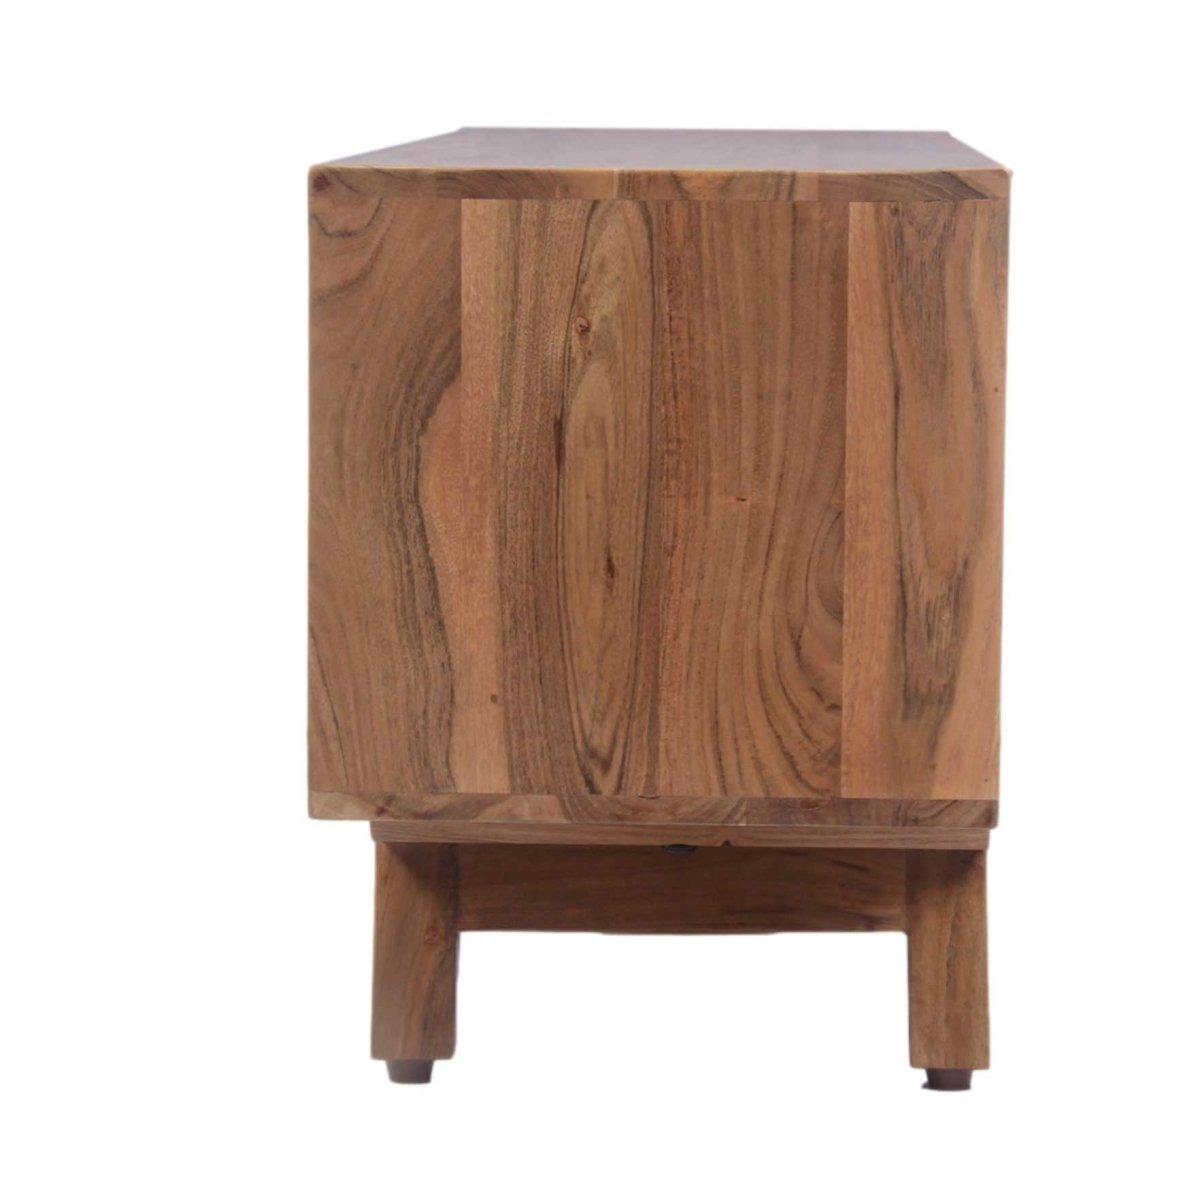 Kenya Acacia wood TV Stand - Rustic Furniture Outlet